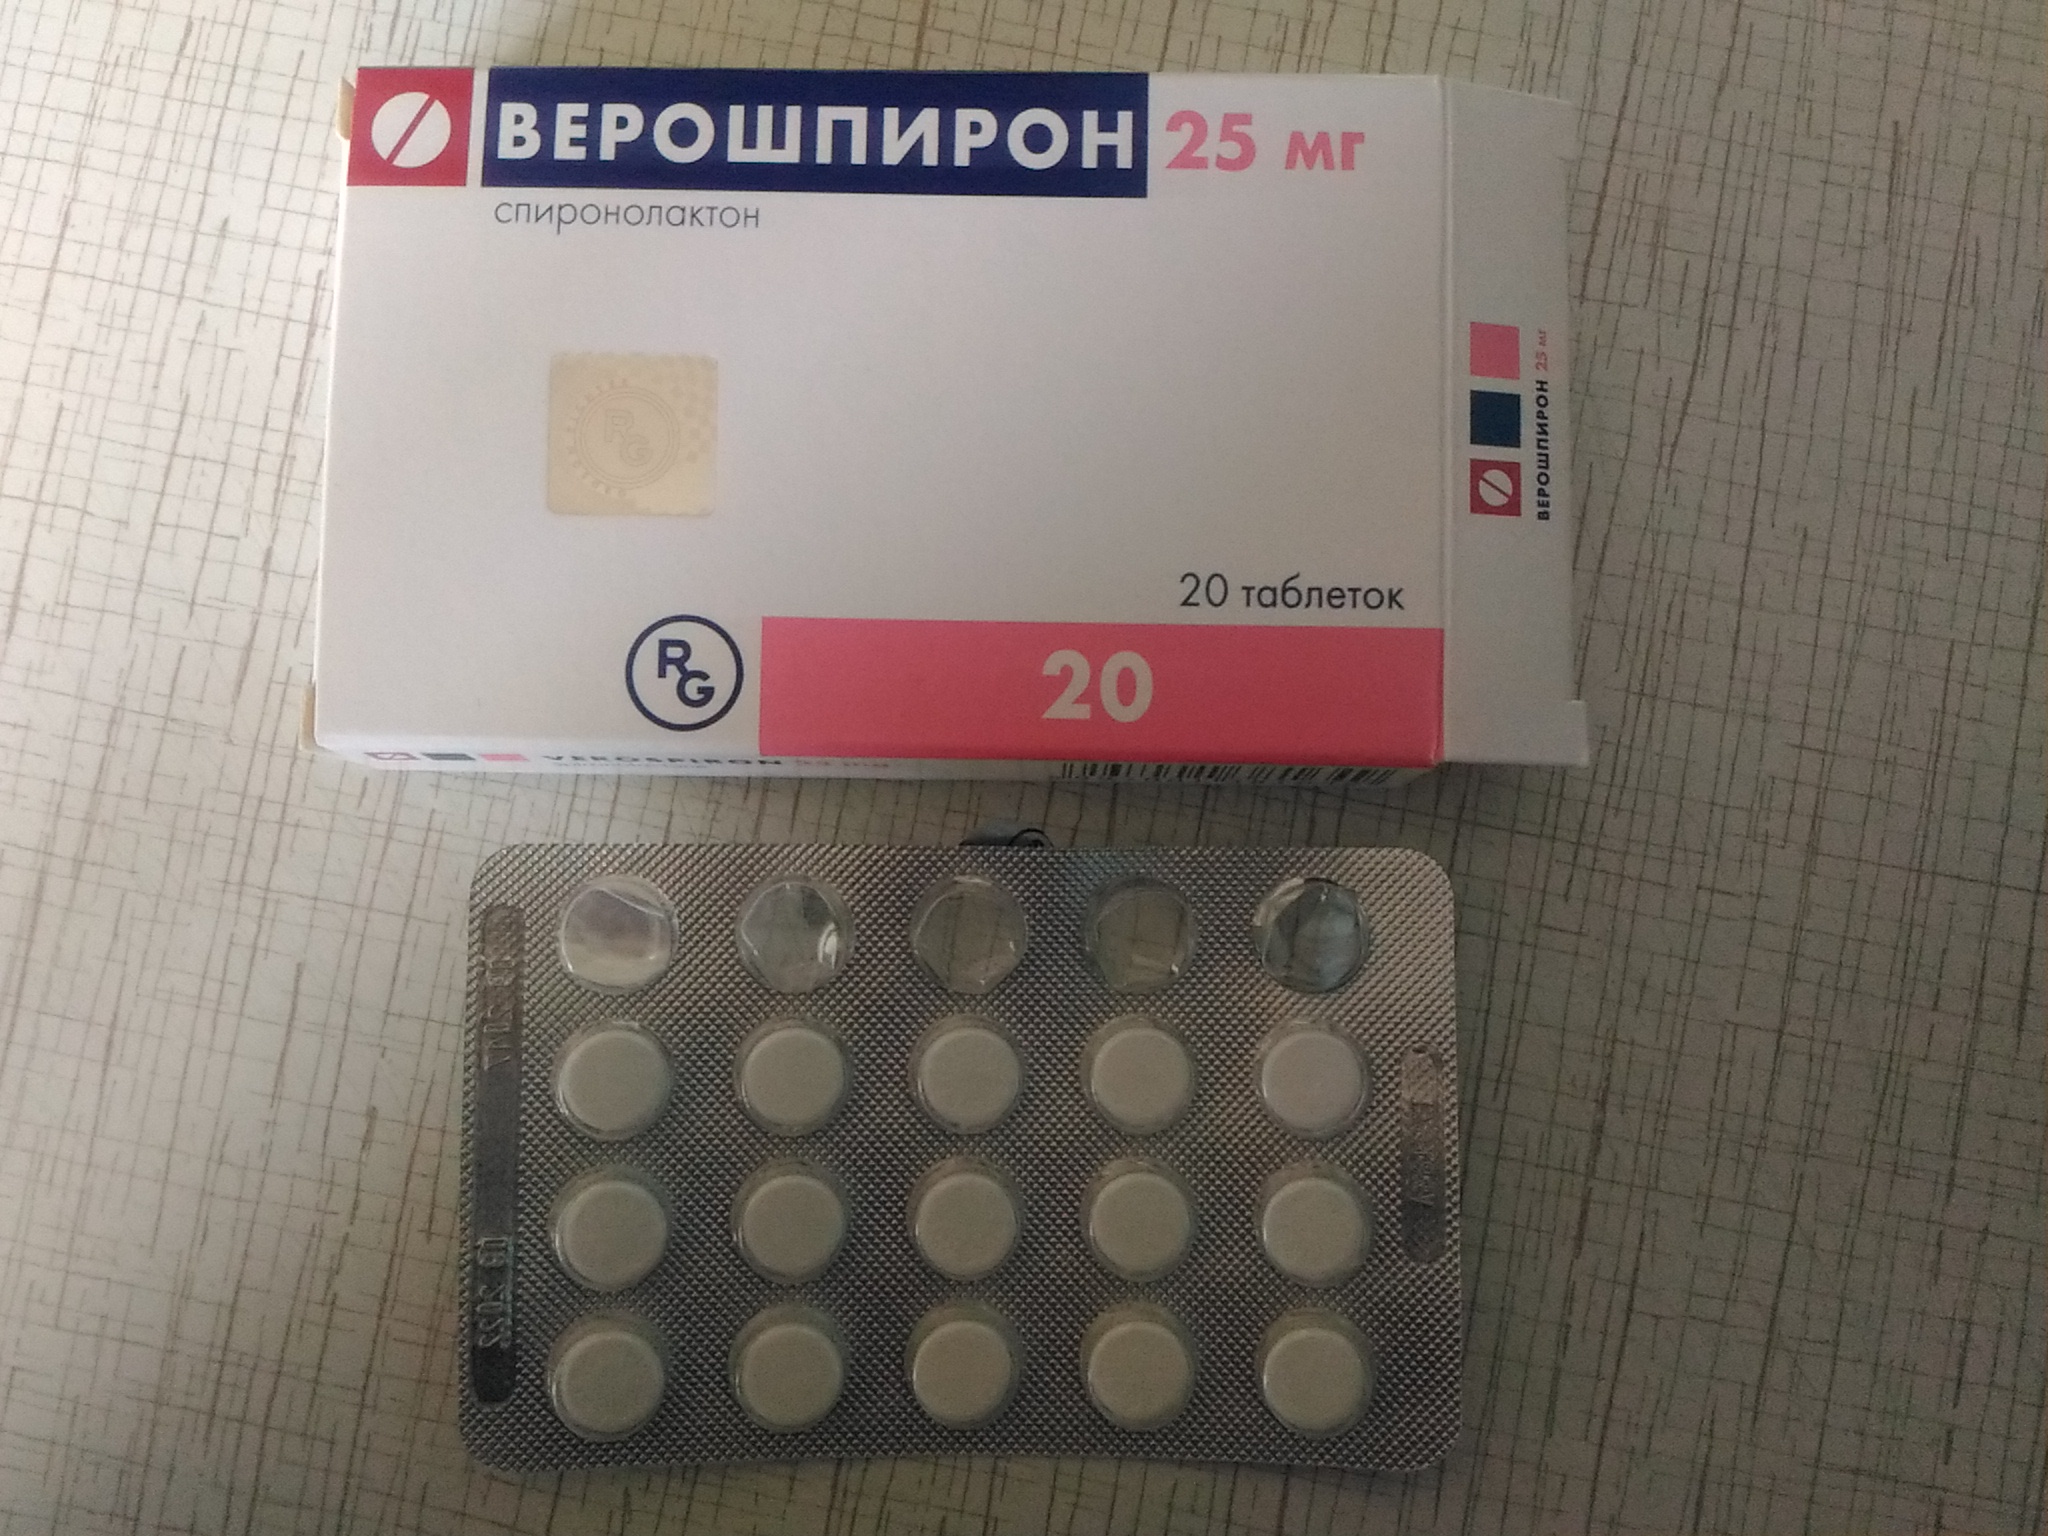 Купить верошпирон 25 мг